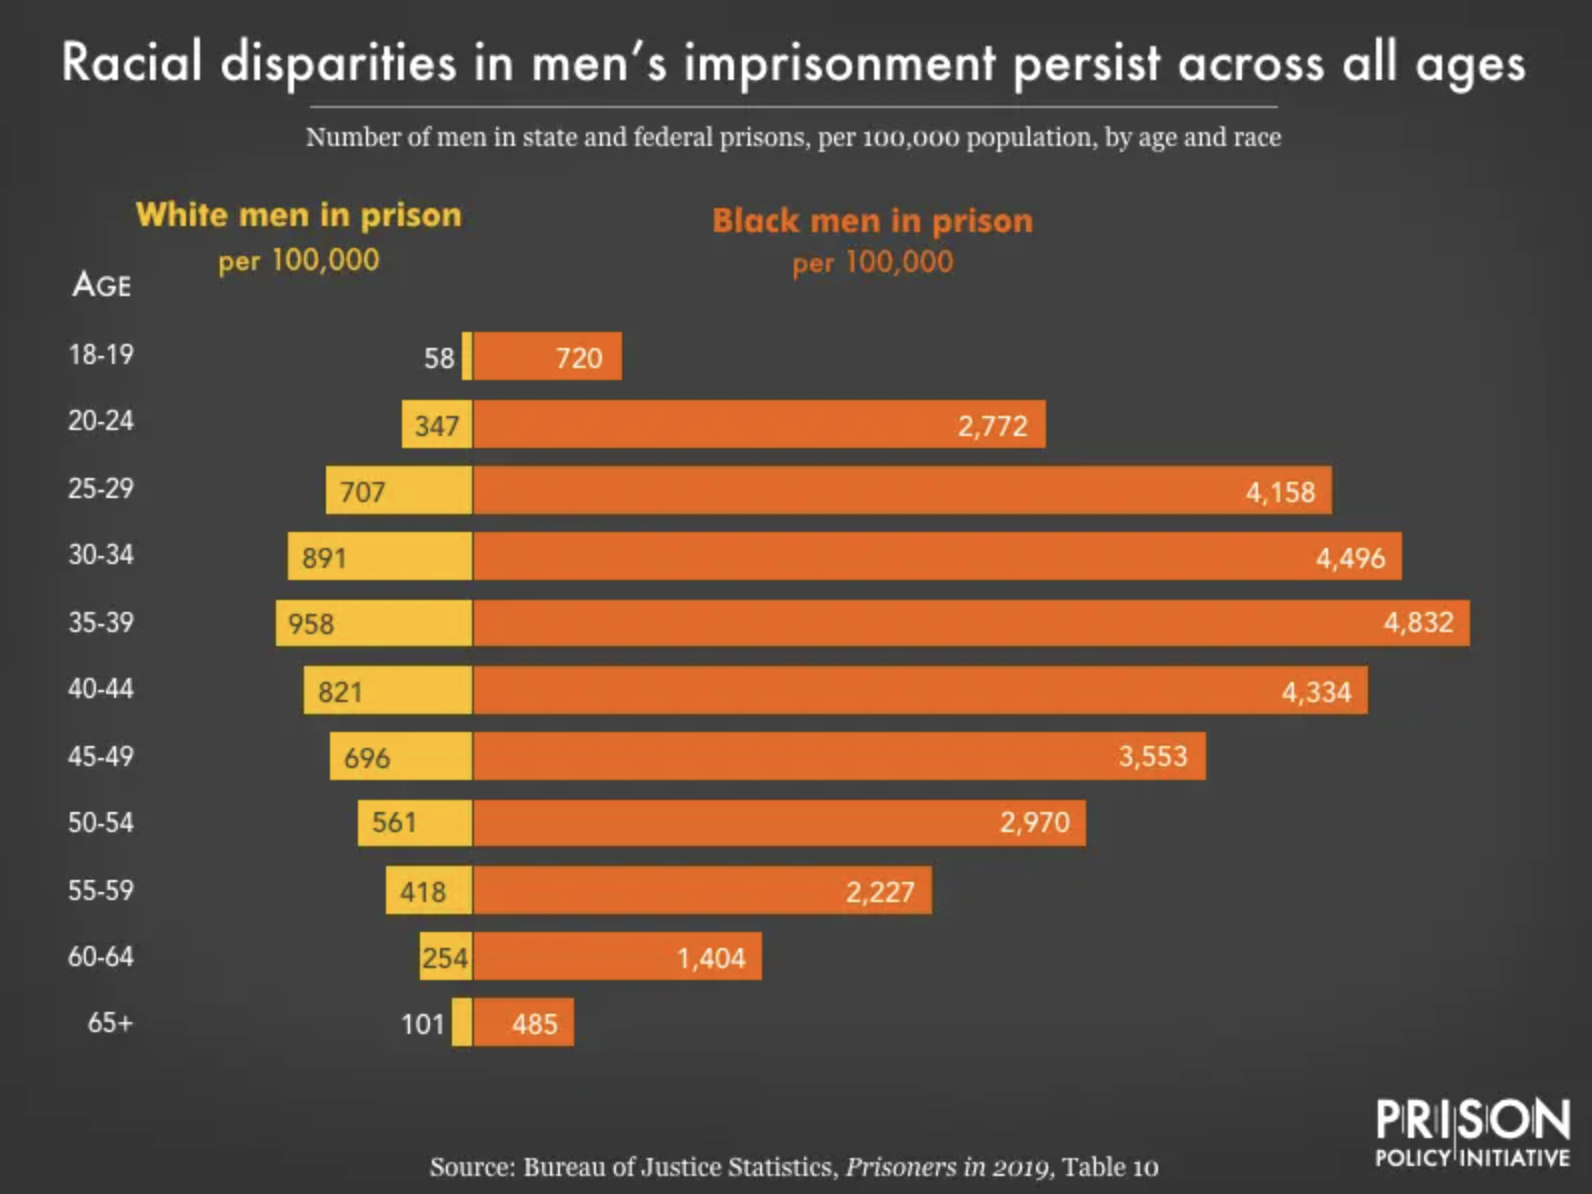 Racial disparities in imprisonment